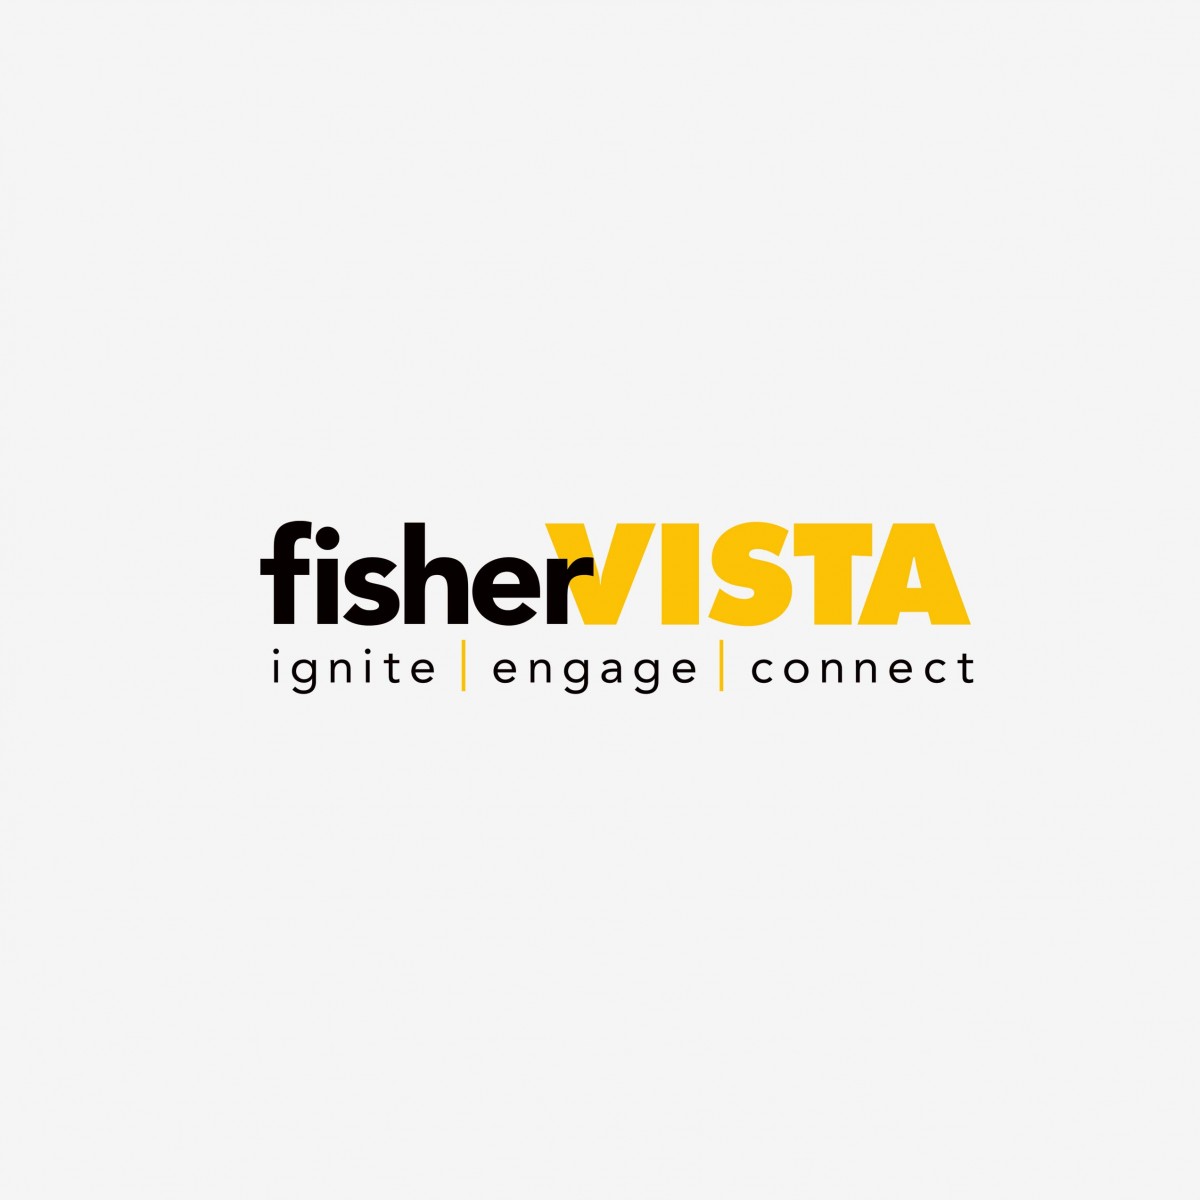 fisherVista corporate identity